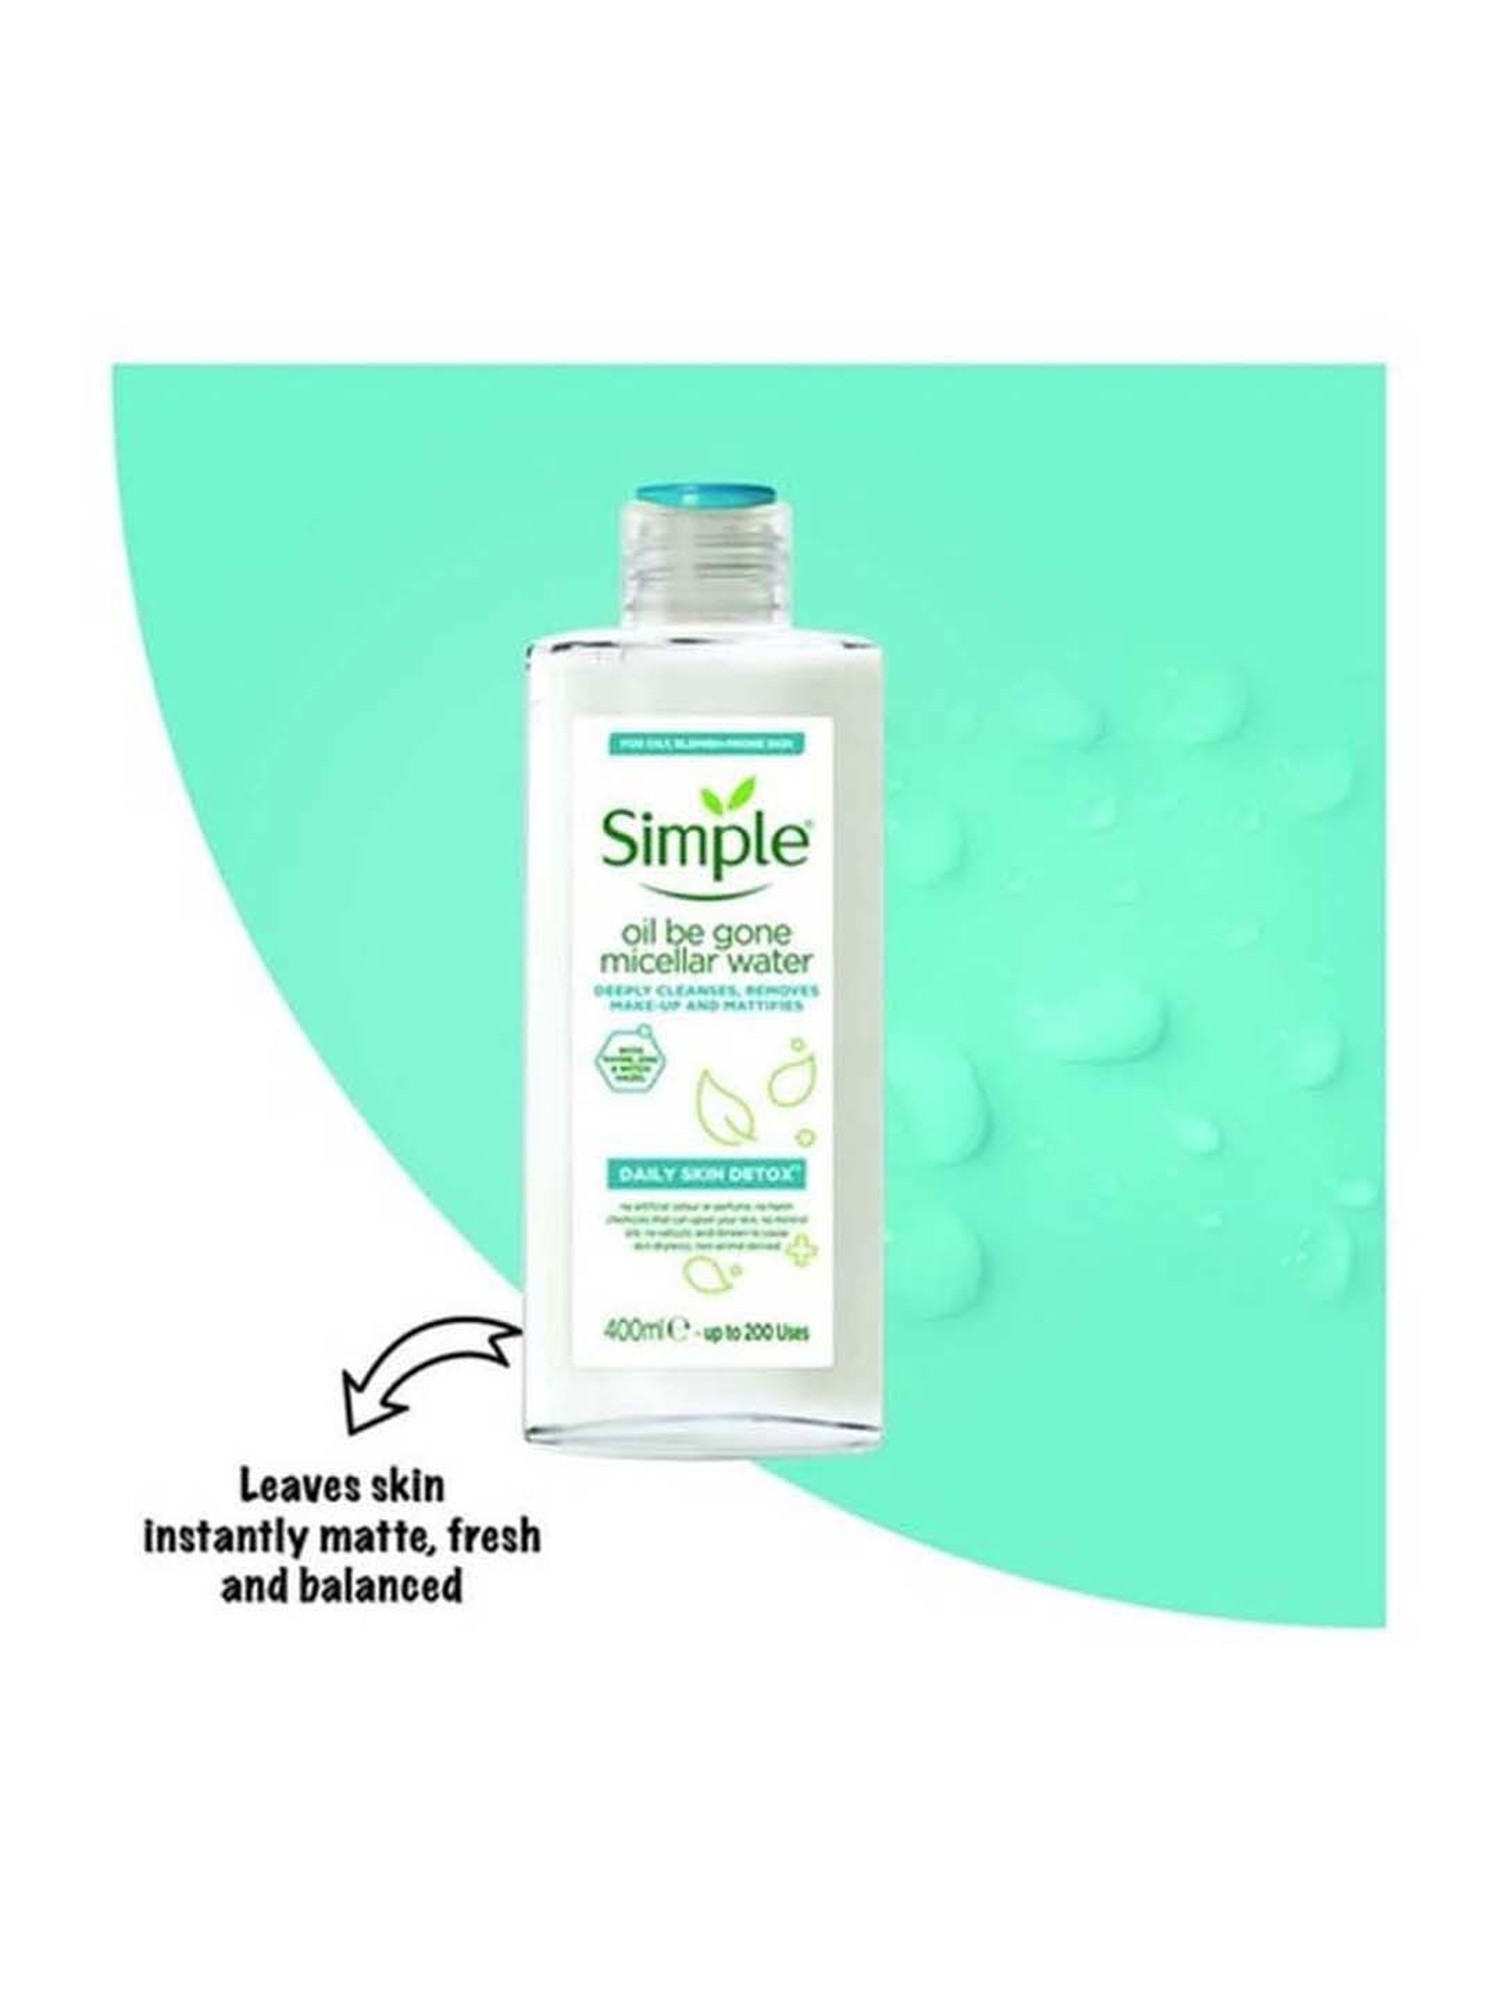 Buy Simple Daily Skin Detox Oil Be Gone Micellar Water - 400 ml